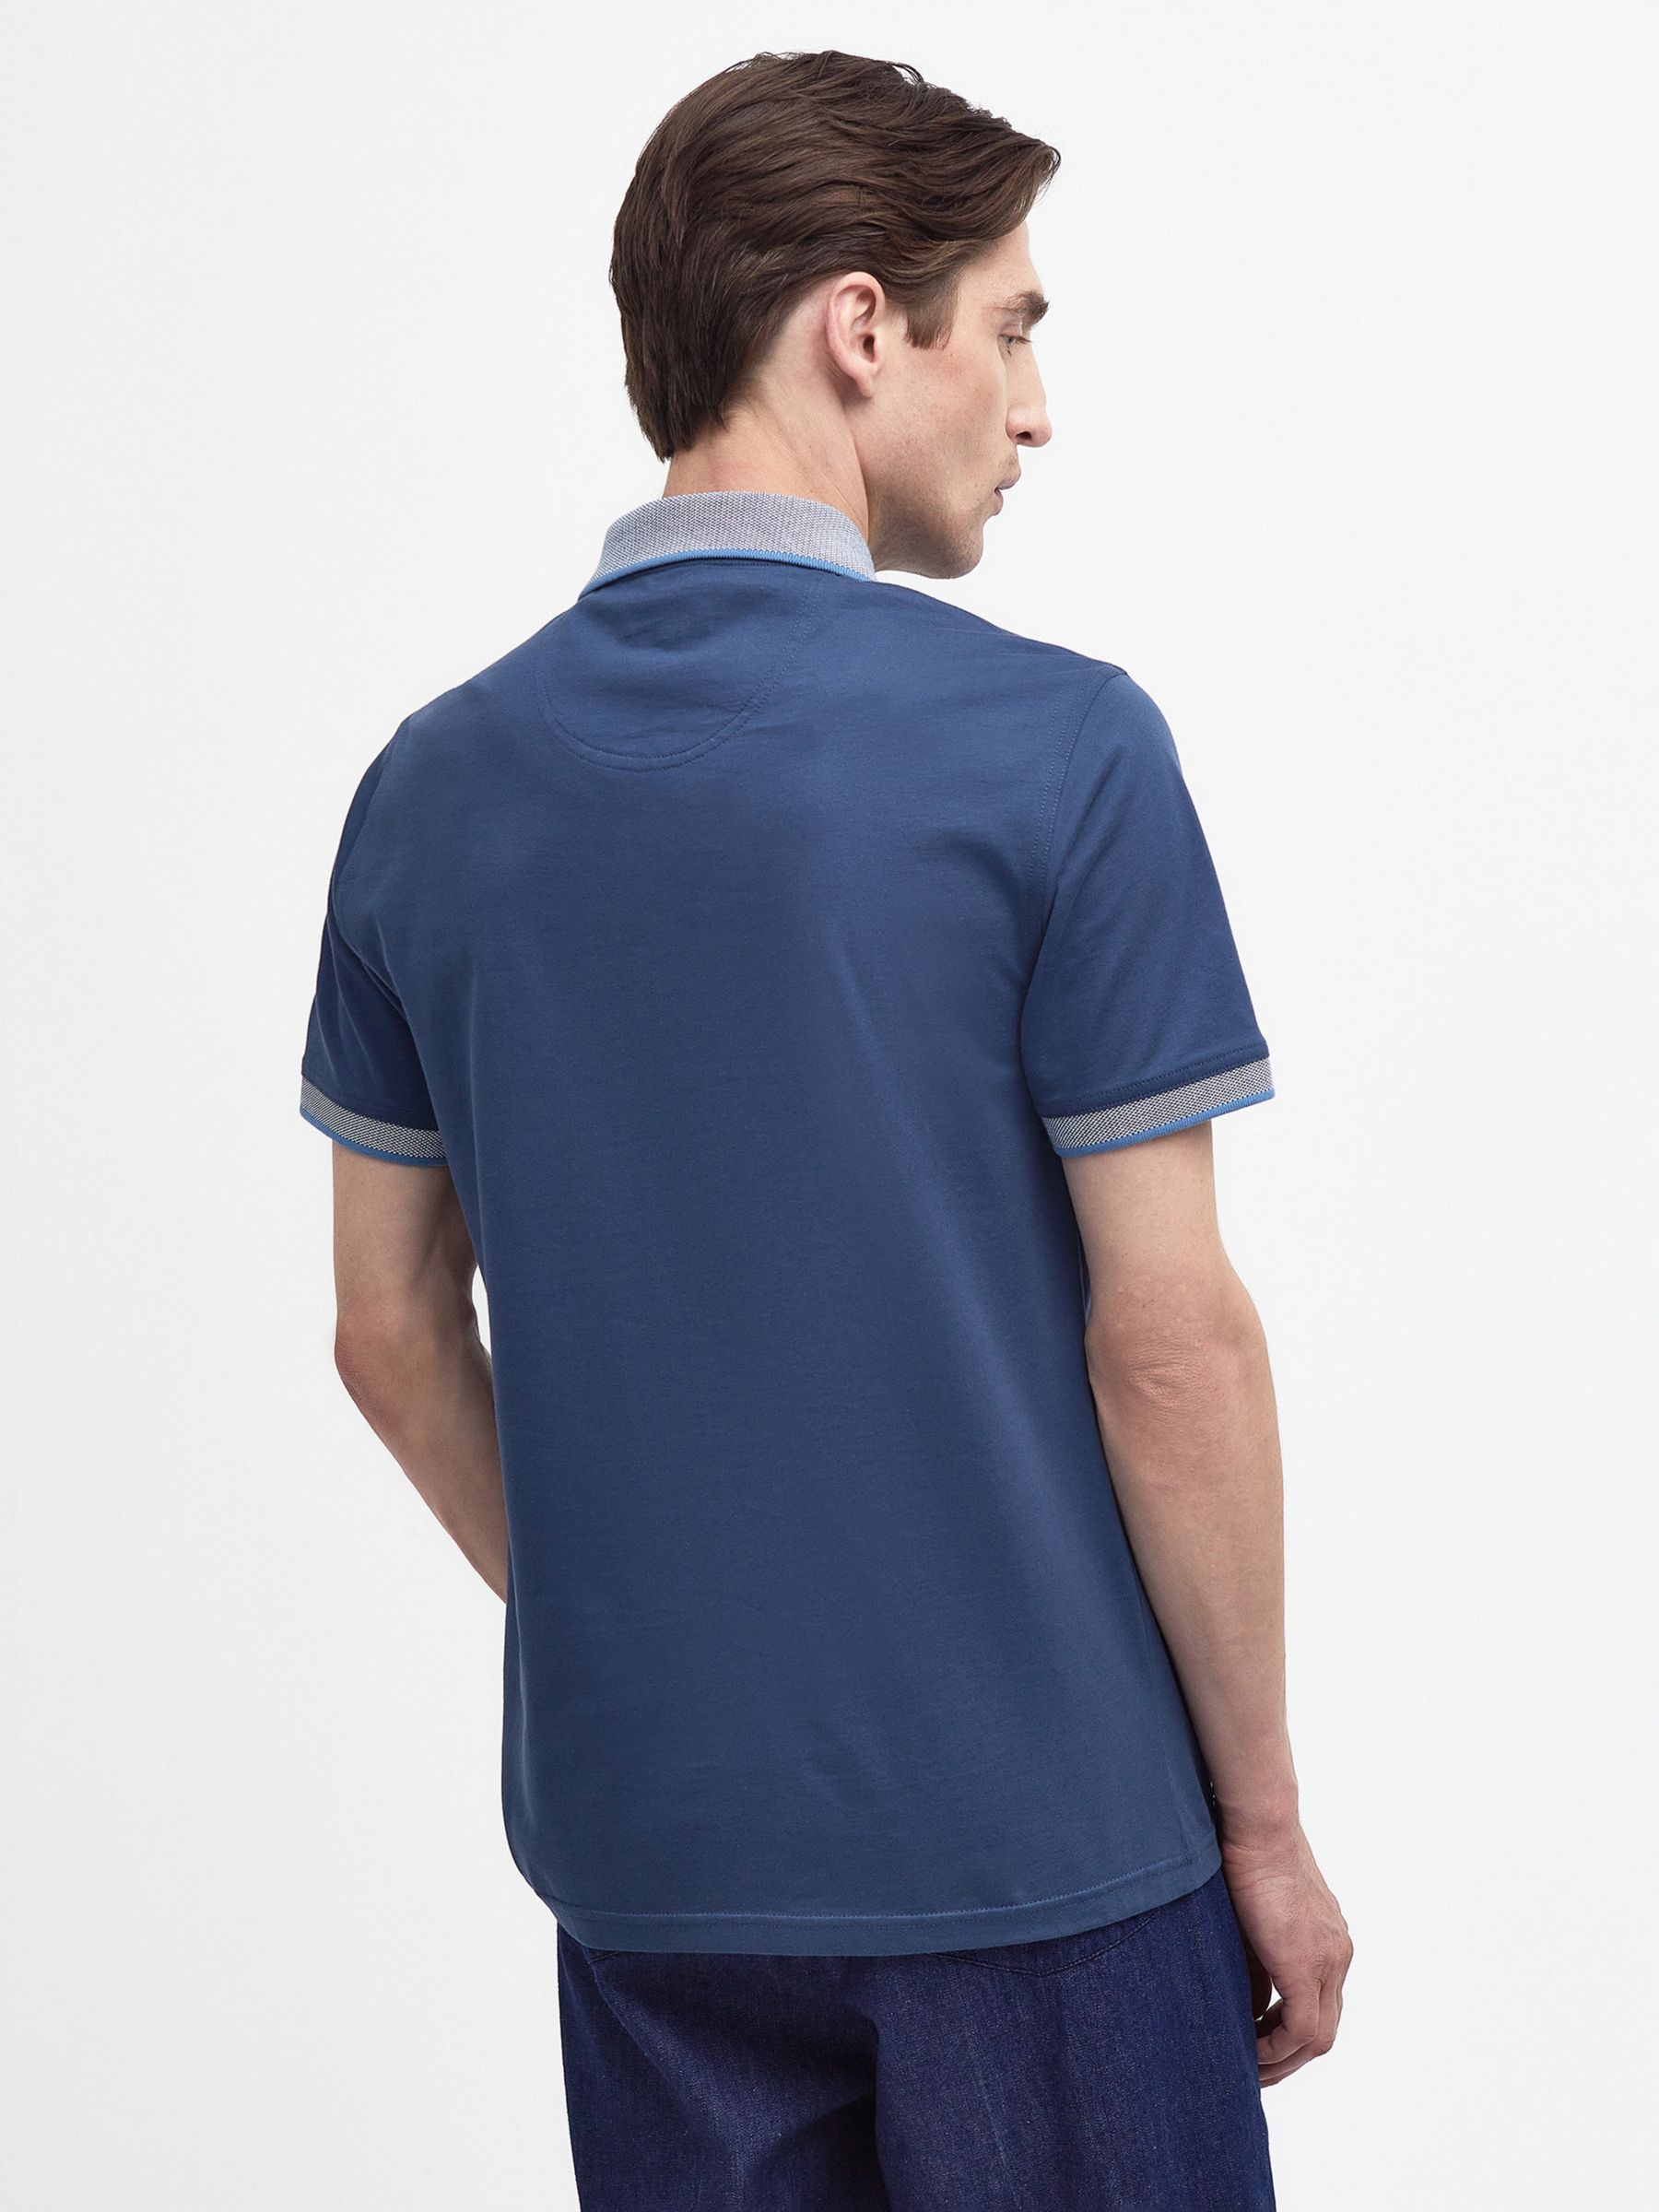 Buy Barbour Cornsay Polo Shirt, Denim Blue Online at johnlewis.com